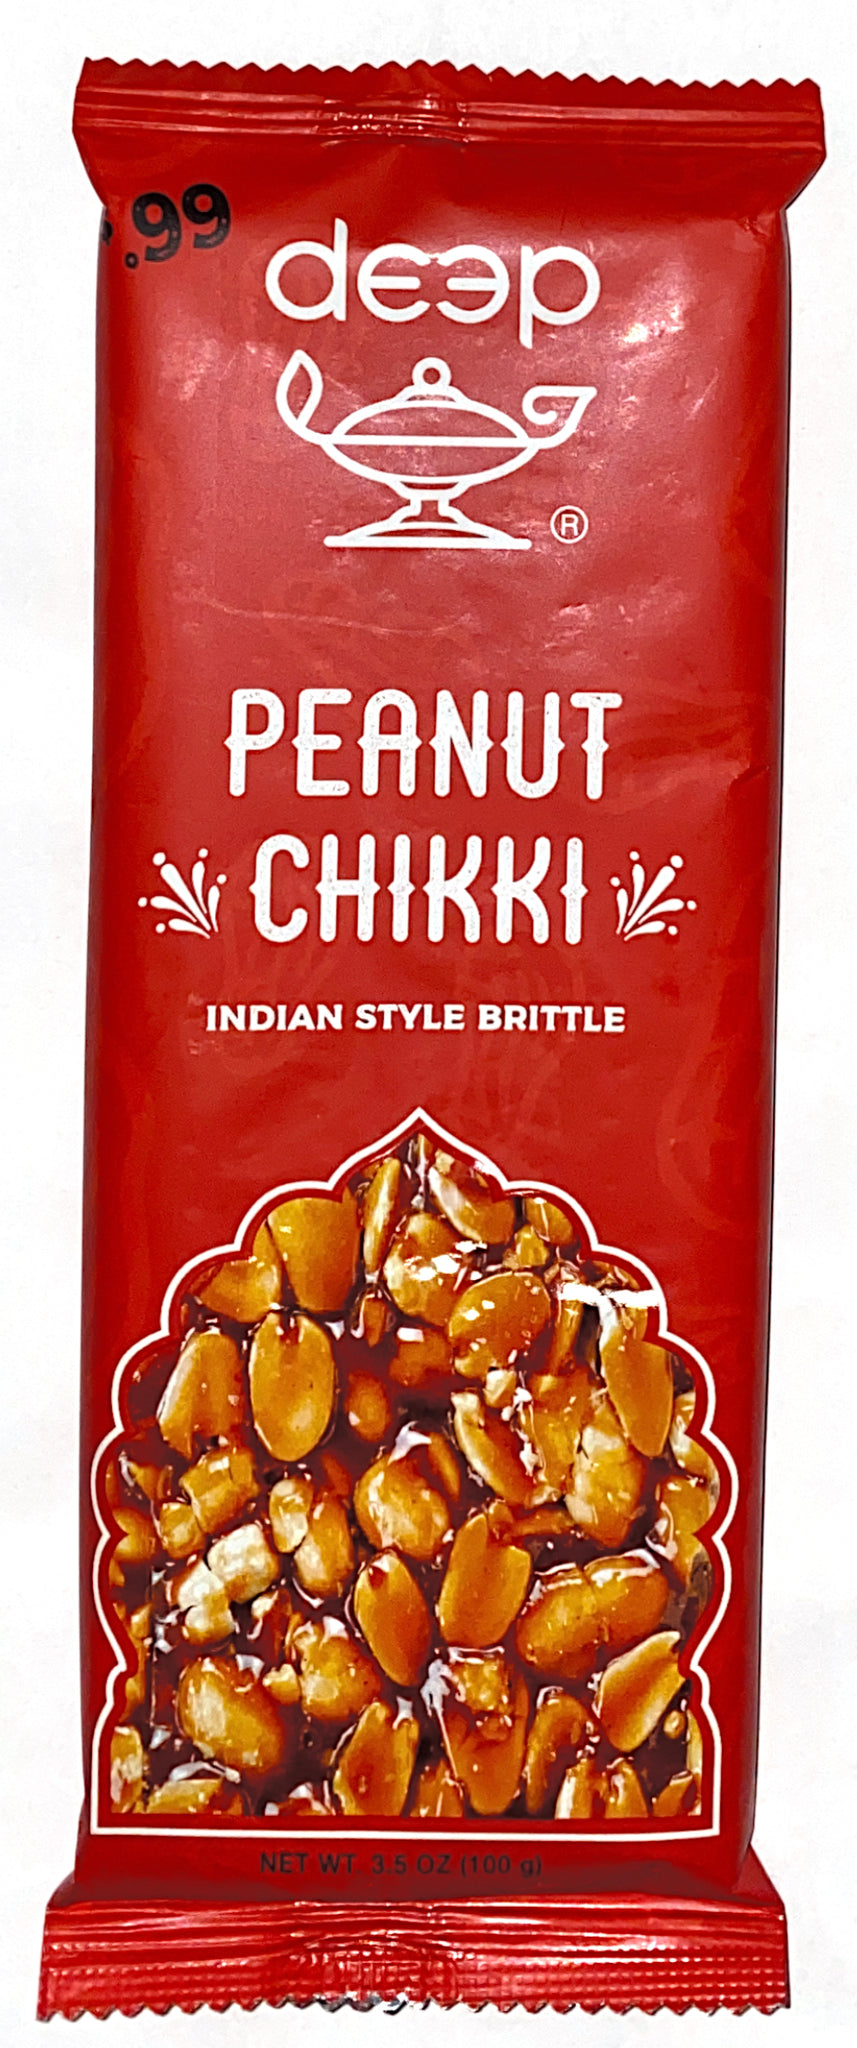 Peanut Chikki